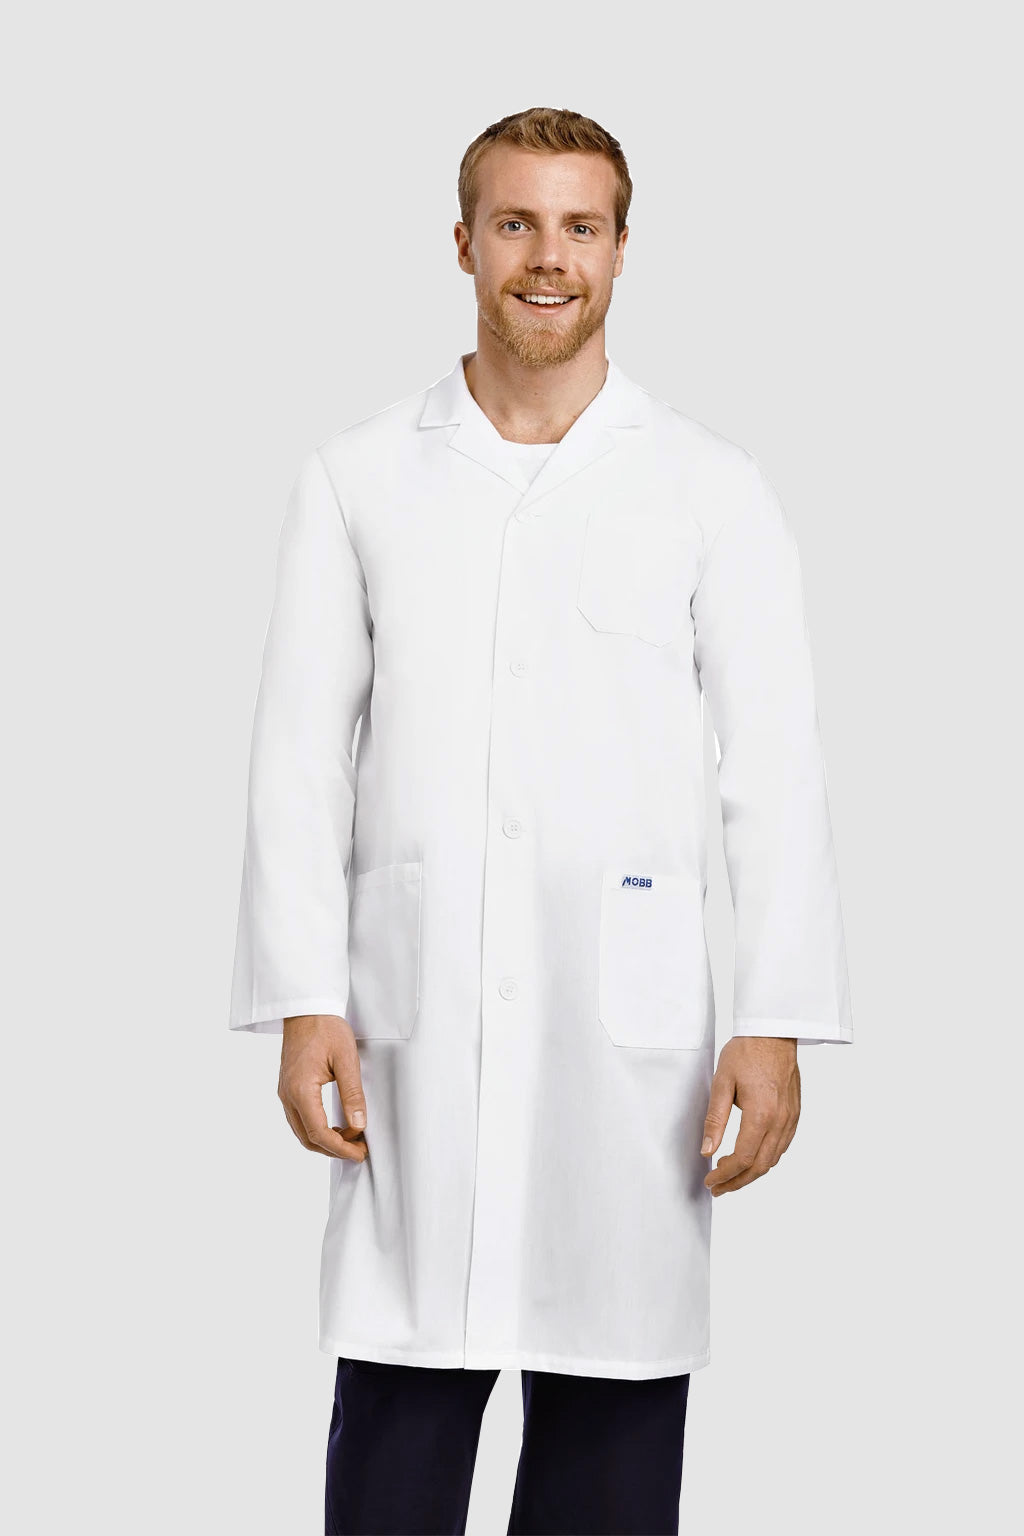 Product - 100% Cotton Full Length MOBB Lab Coat